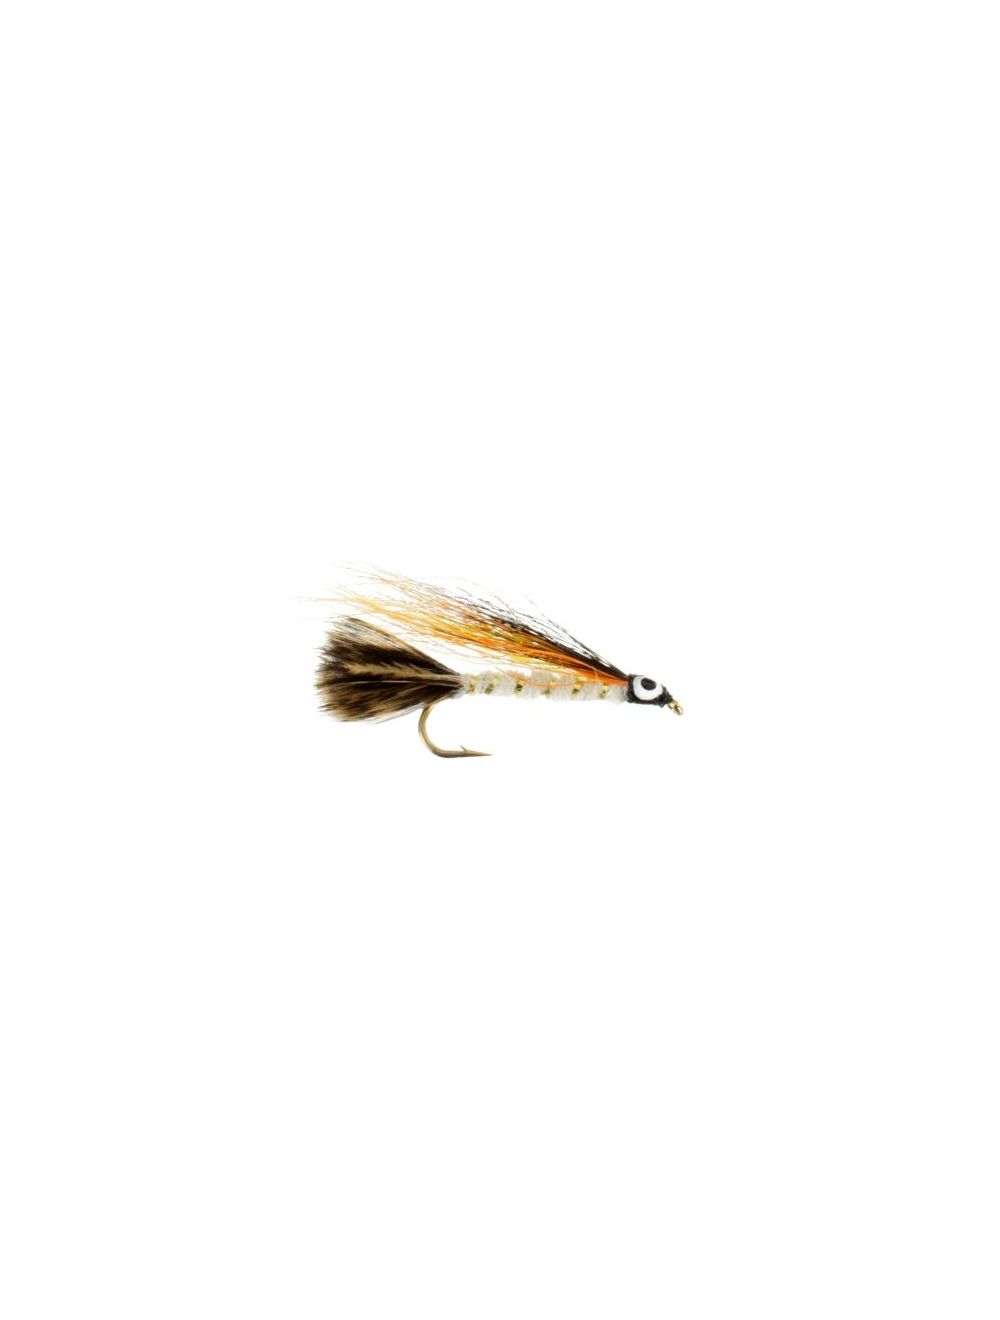 https://eadn-wc02-1020161.nxedge.io/cdn/media/catalog/product/cache/32b930e20bfef0c9badd7ee253a86131/l/i/little-brown-trout-fly-fishing-flies-streamers_preview.jpeg